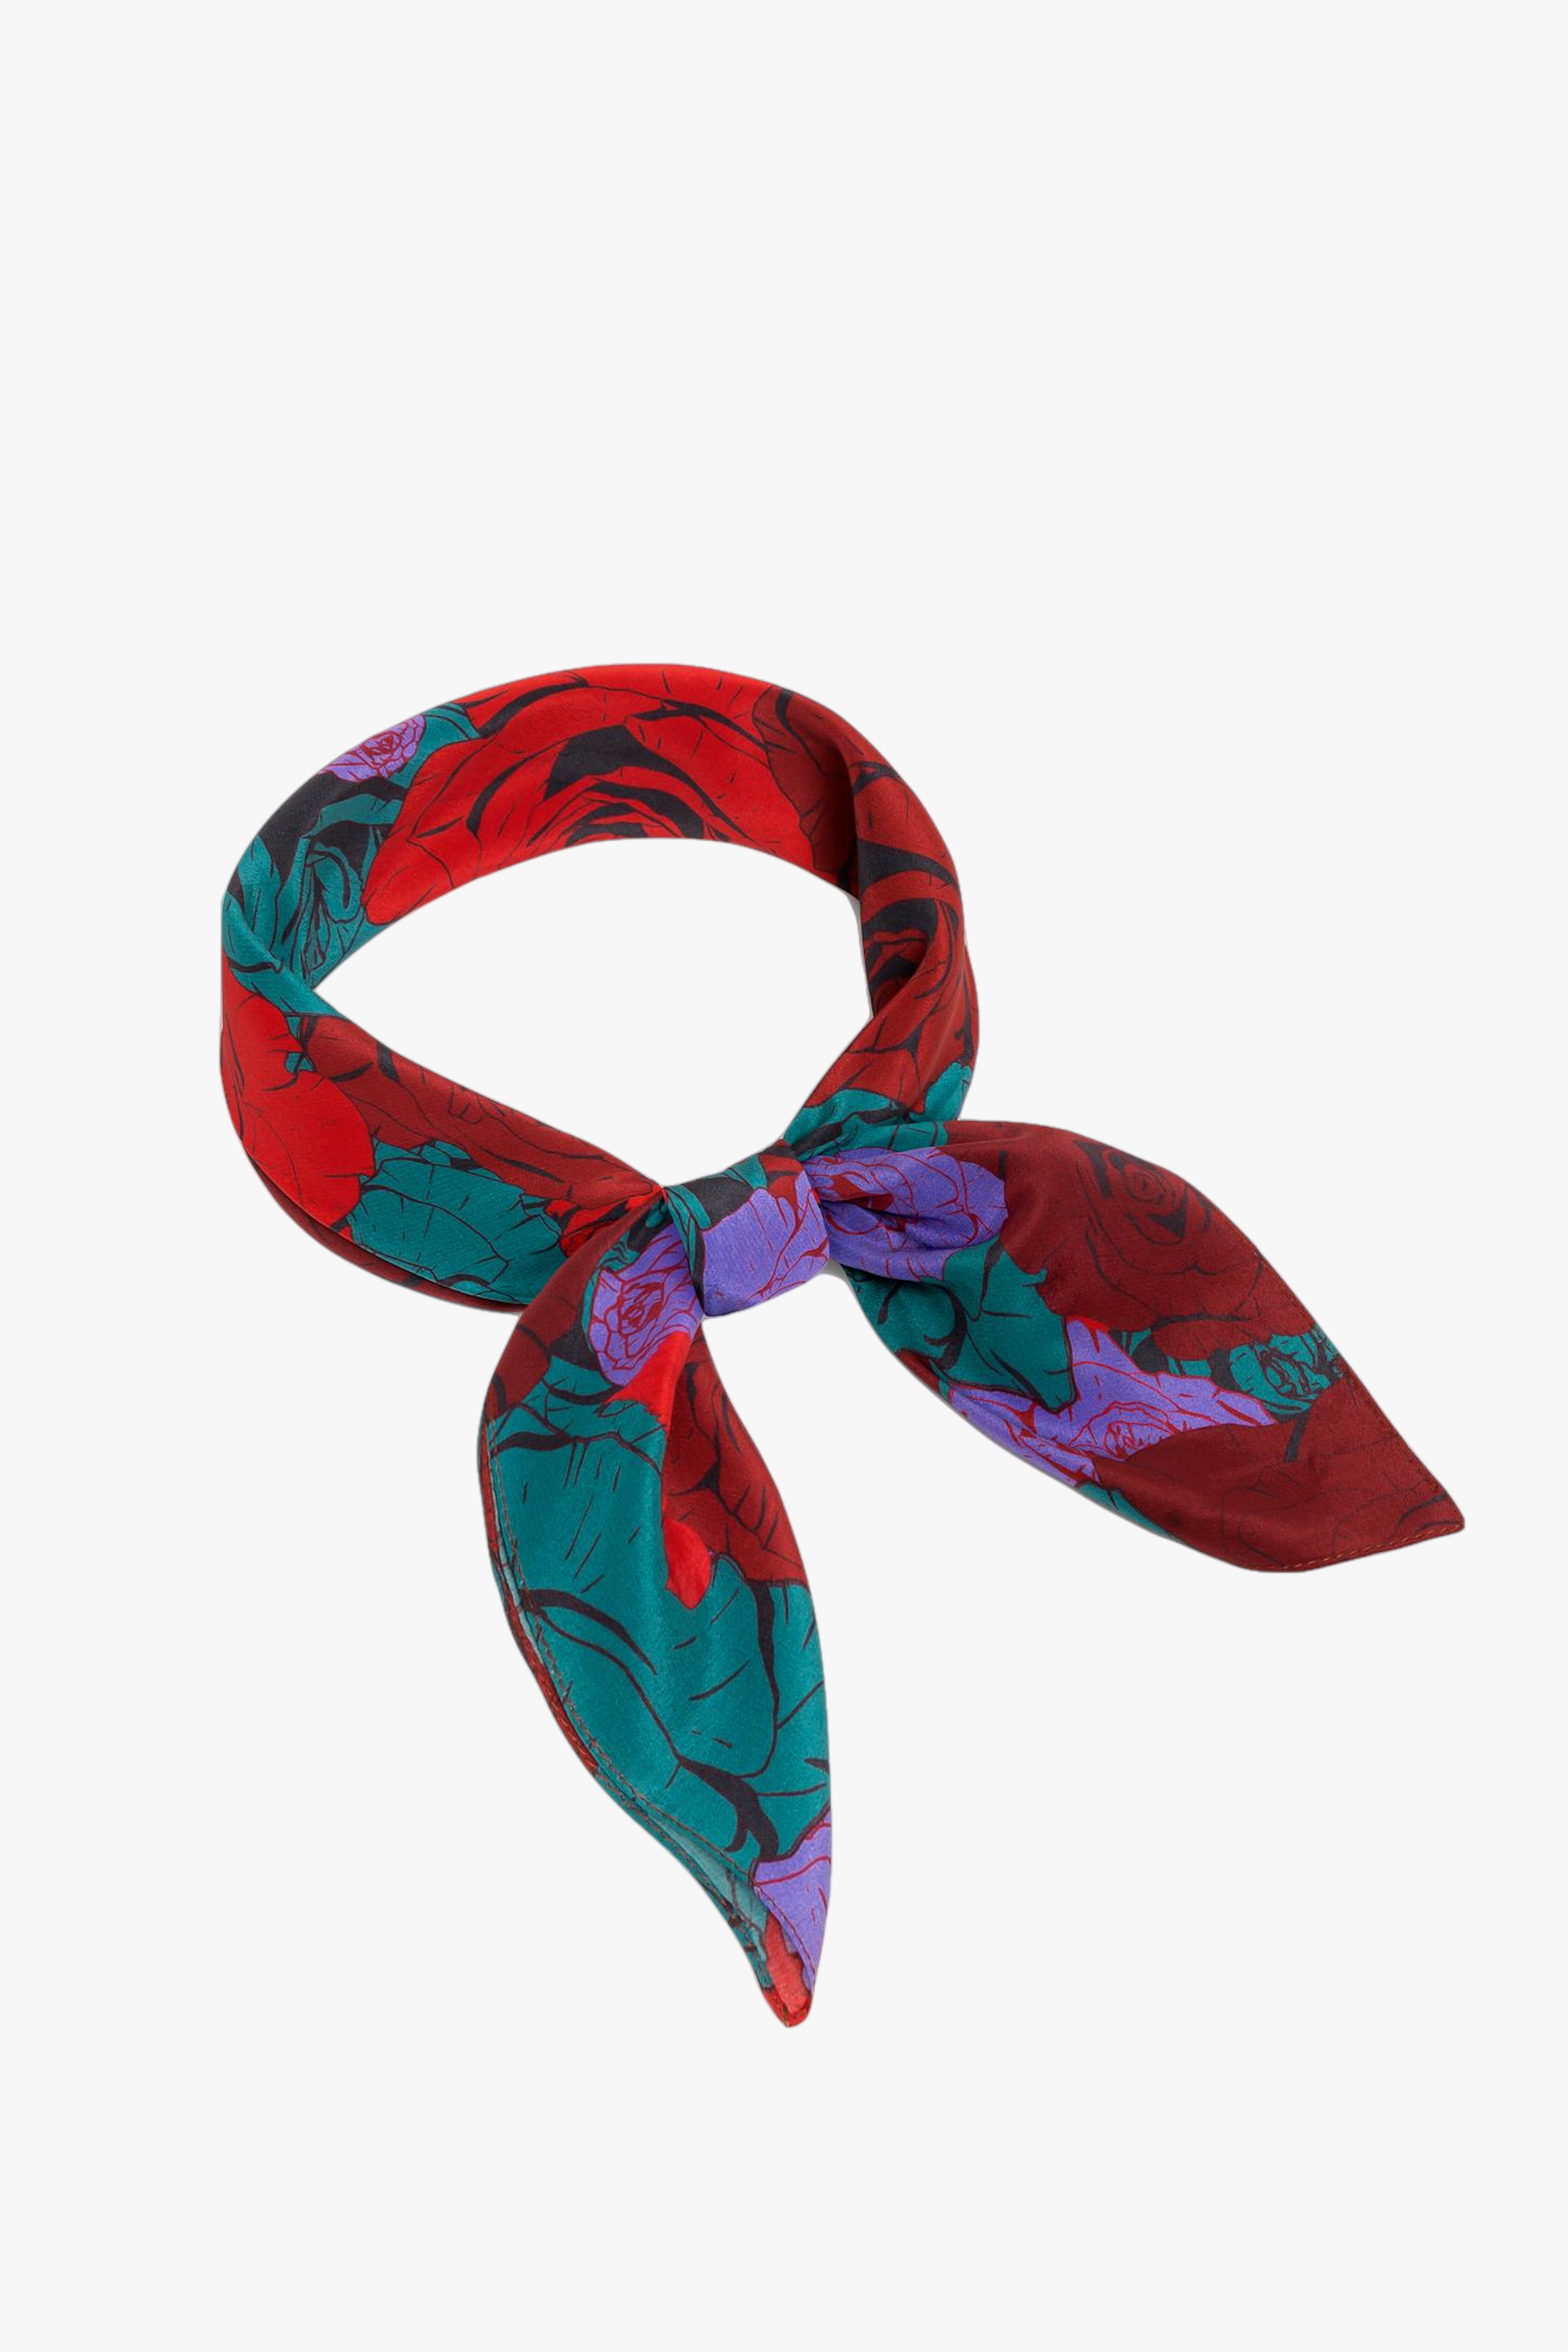 Zoya Handmade - My new scarf — Dans Les Bras De La Nature.